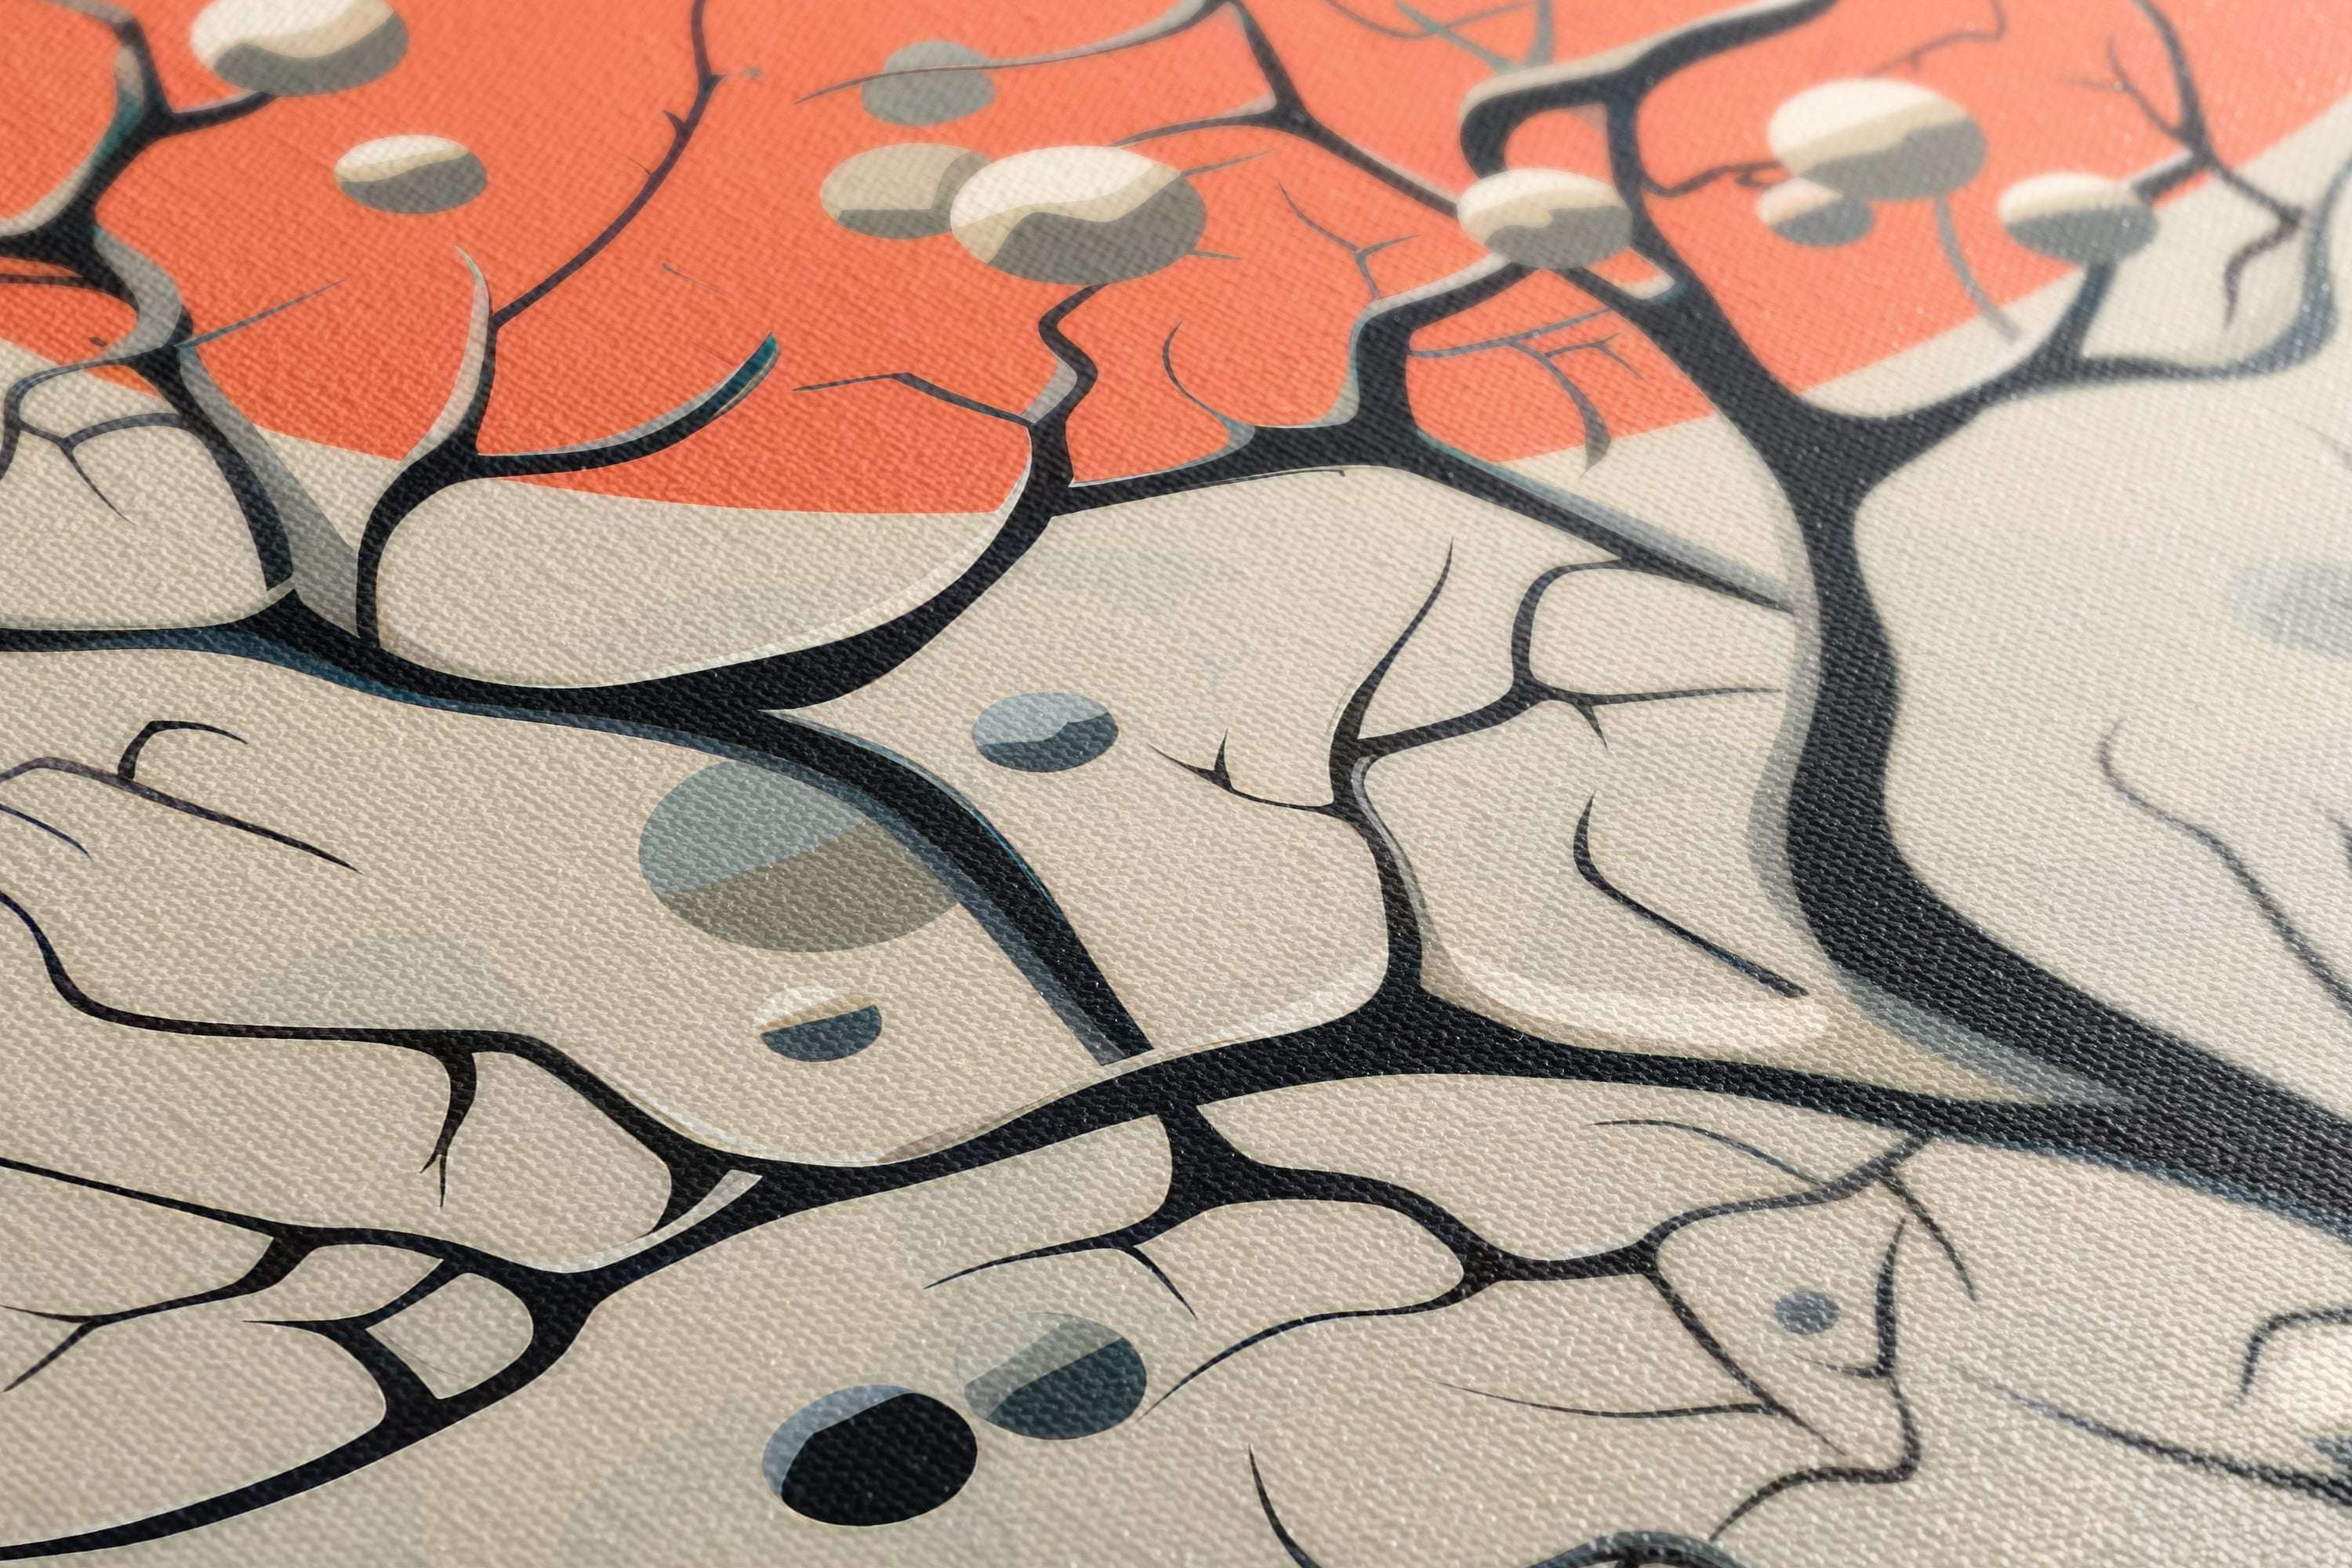 Luminous Orbs and Midnight Trees - Canvas Print - Artoholica Ready to Hang Canvas Print